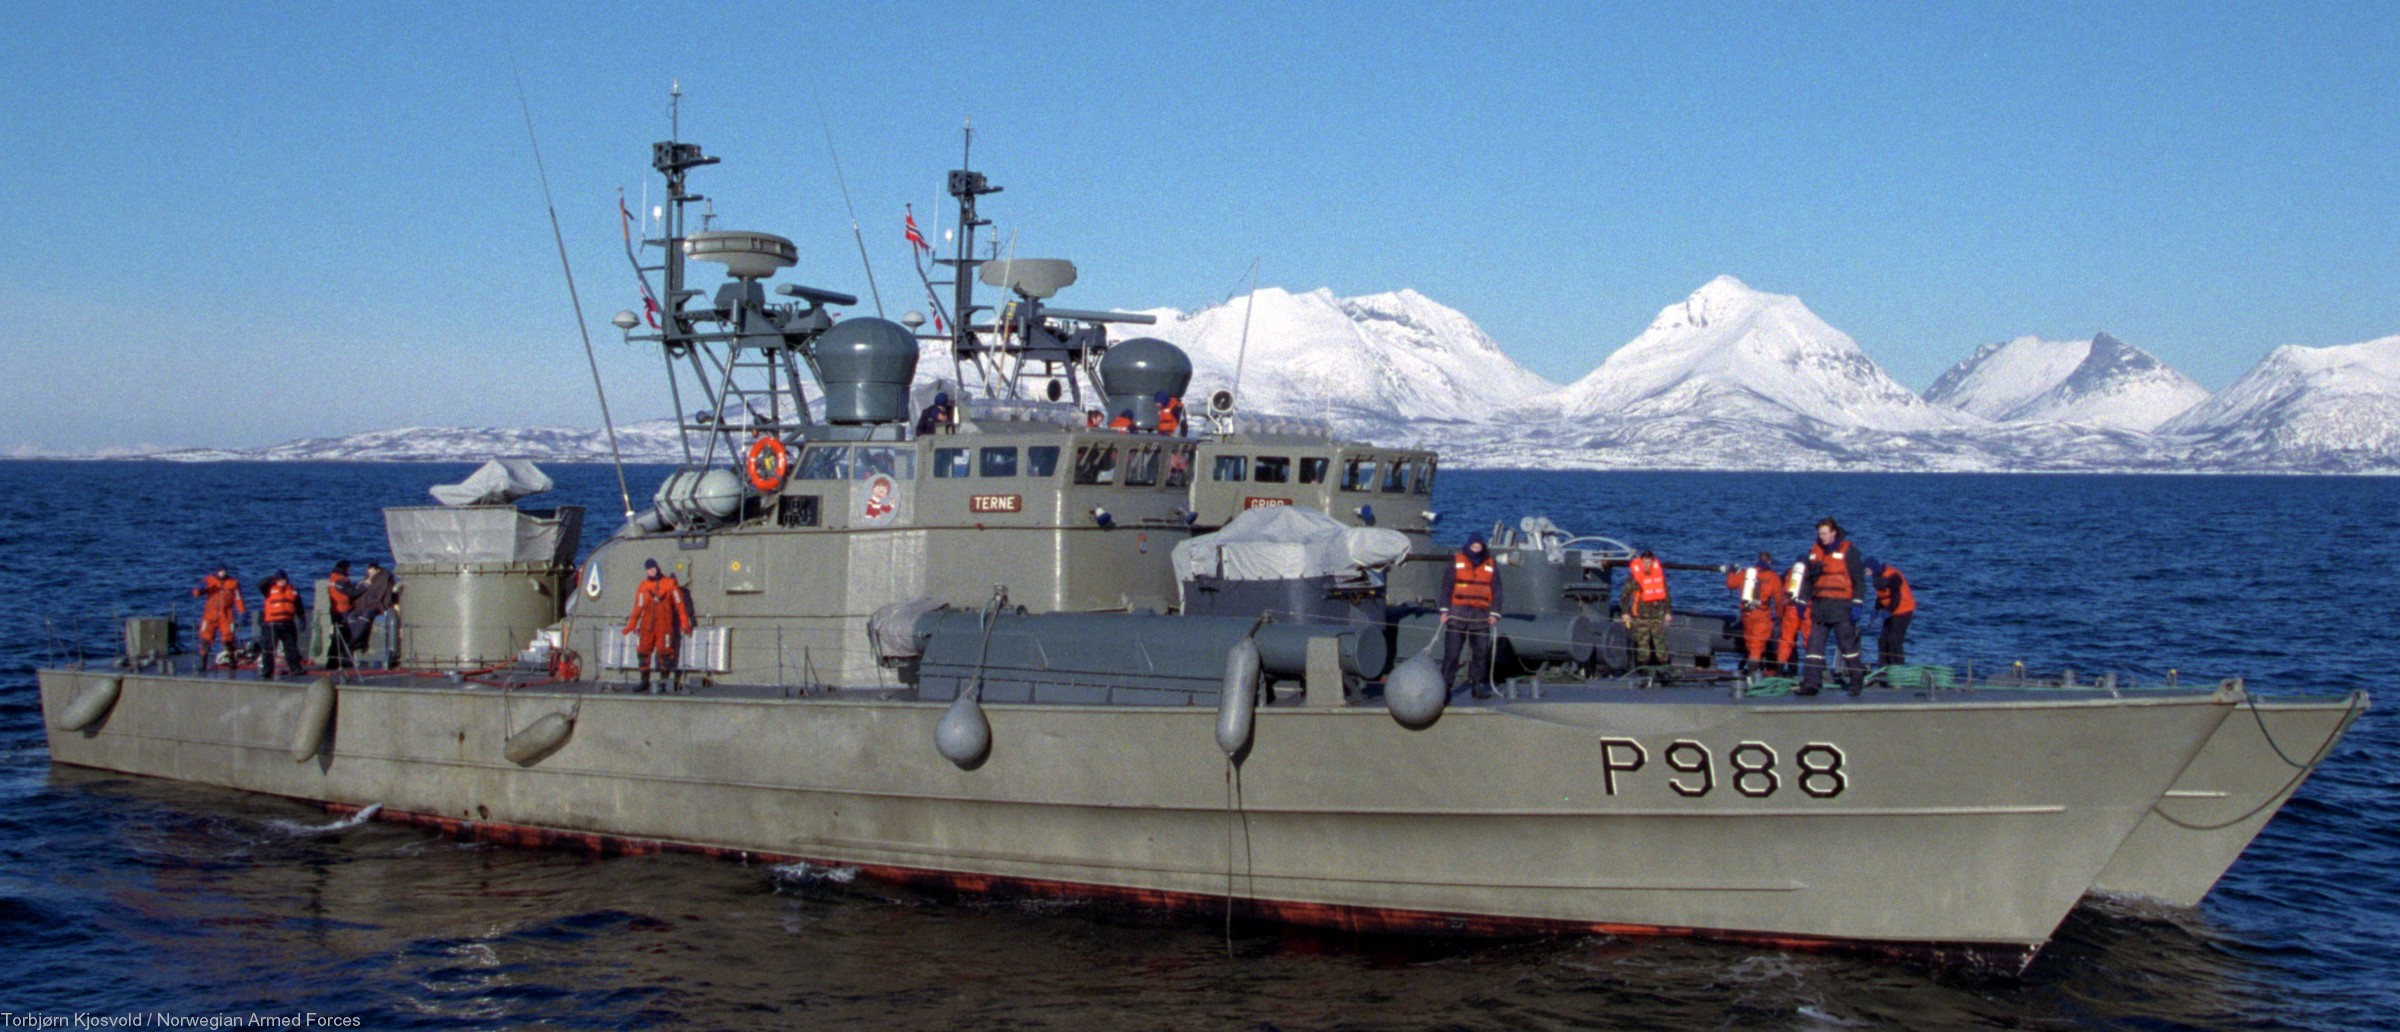 p-988 knm terne hauk class fast attack missile torpedo craft boat norwegian navy sjøforsvaret 22